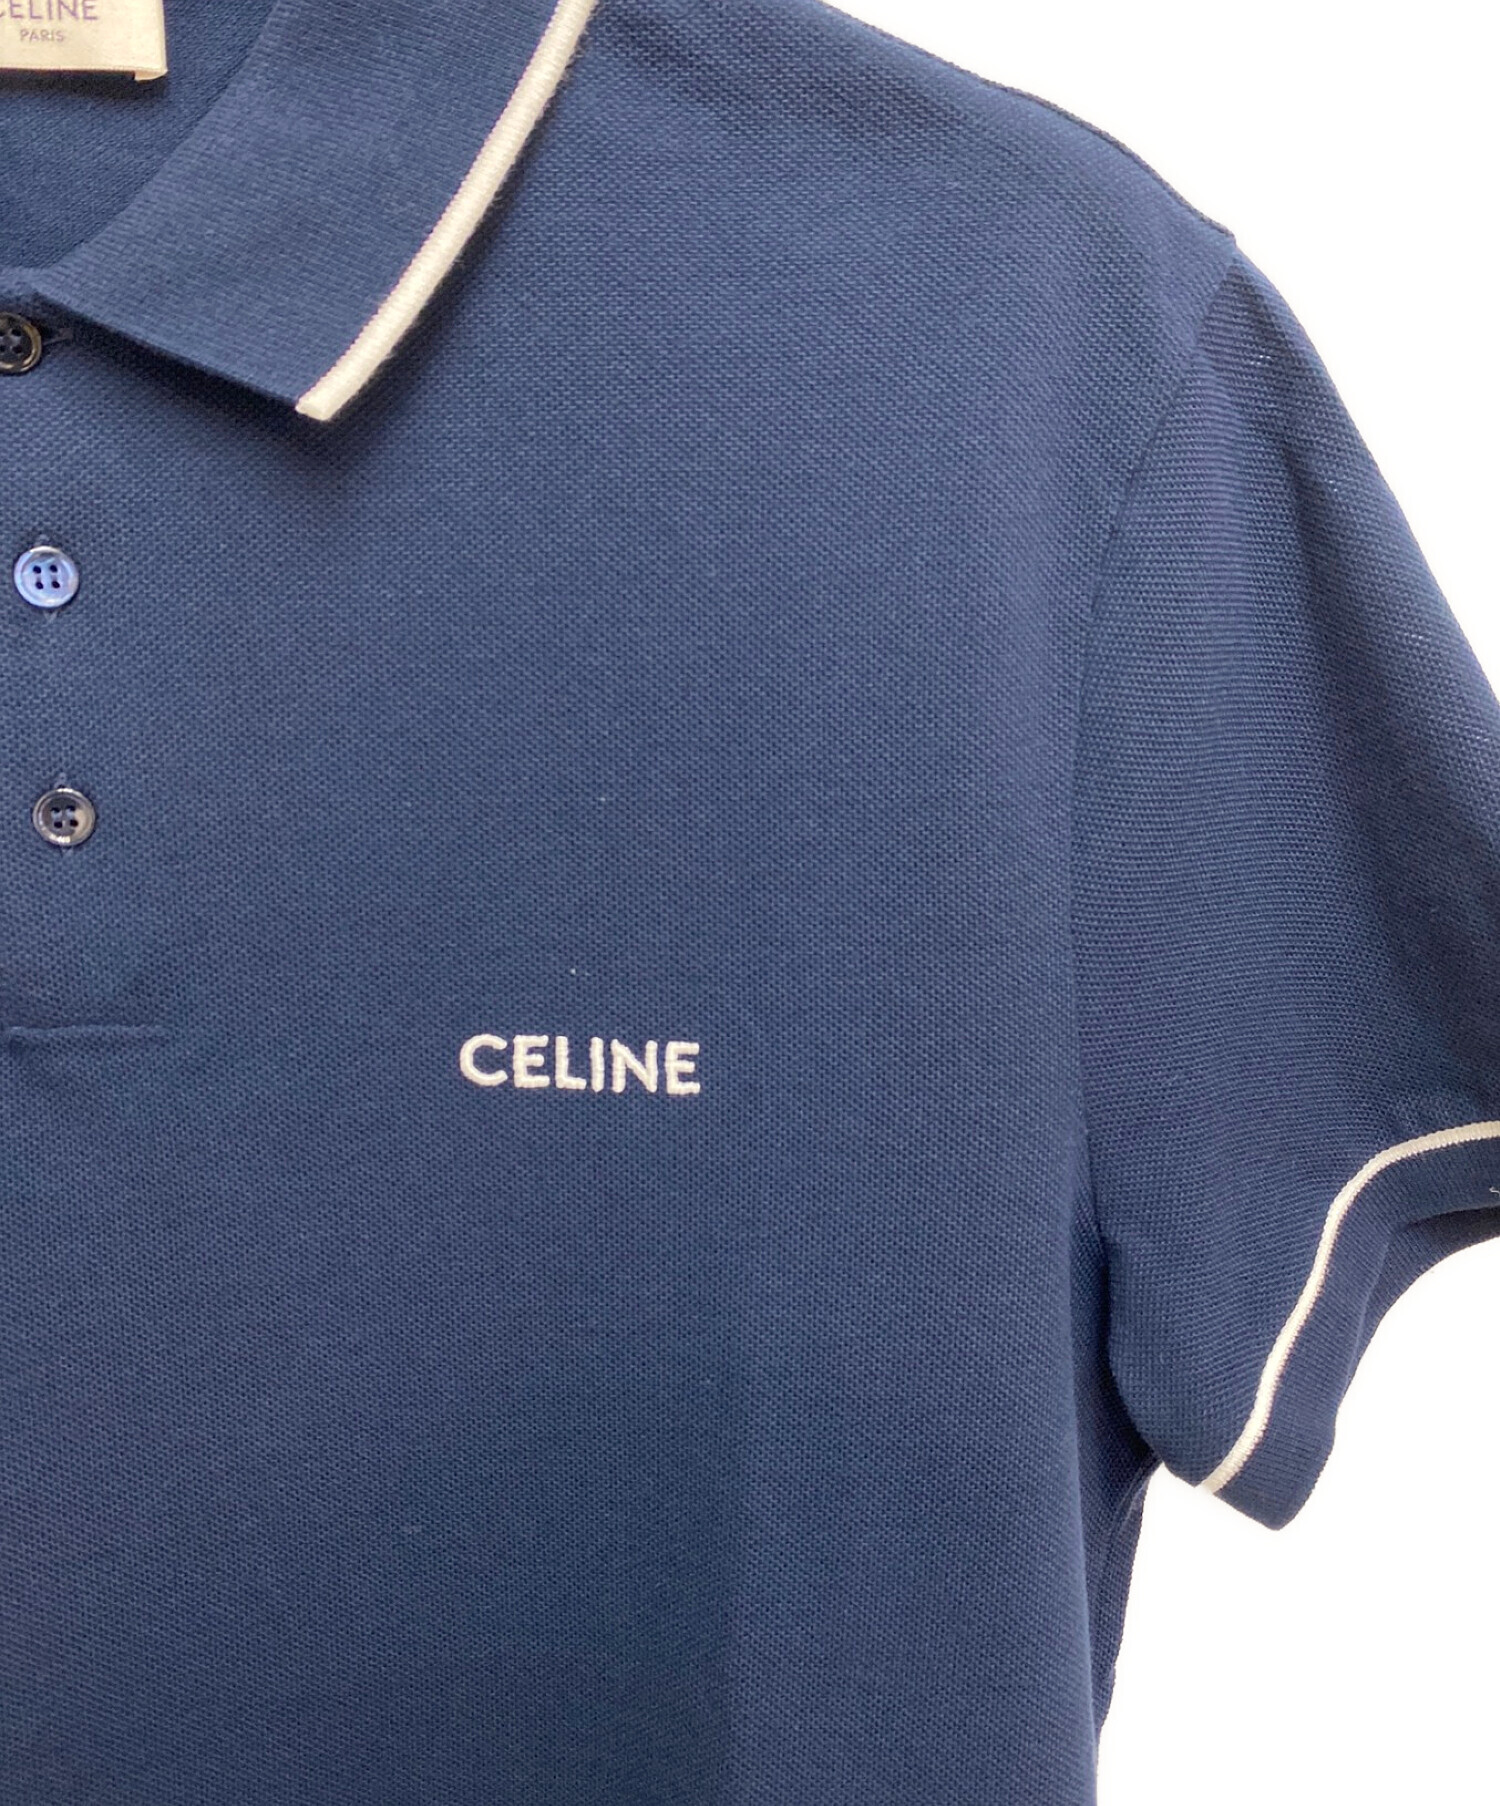 CELINE (セリーヌ) エンブロイダリー クラシック ポロシャツ ネイビー サイズ:M